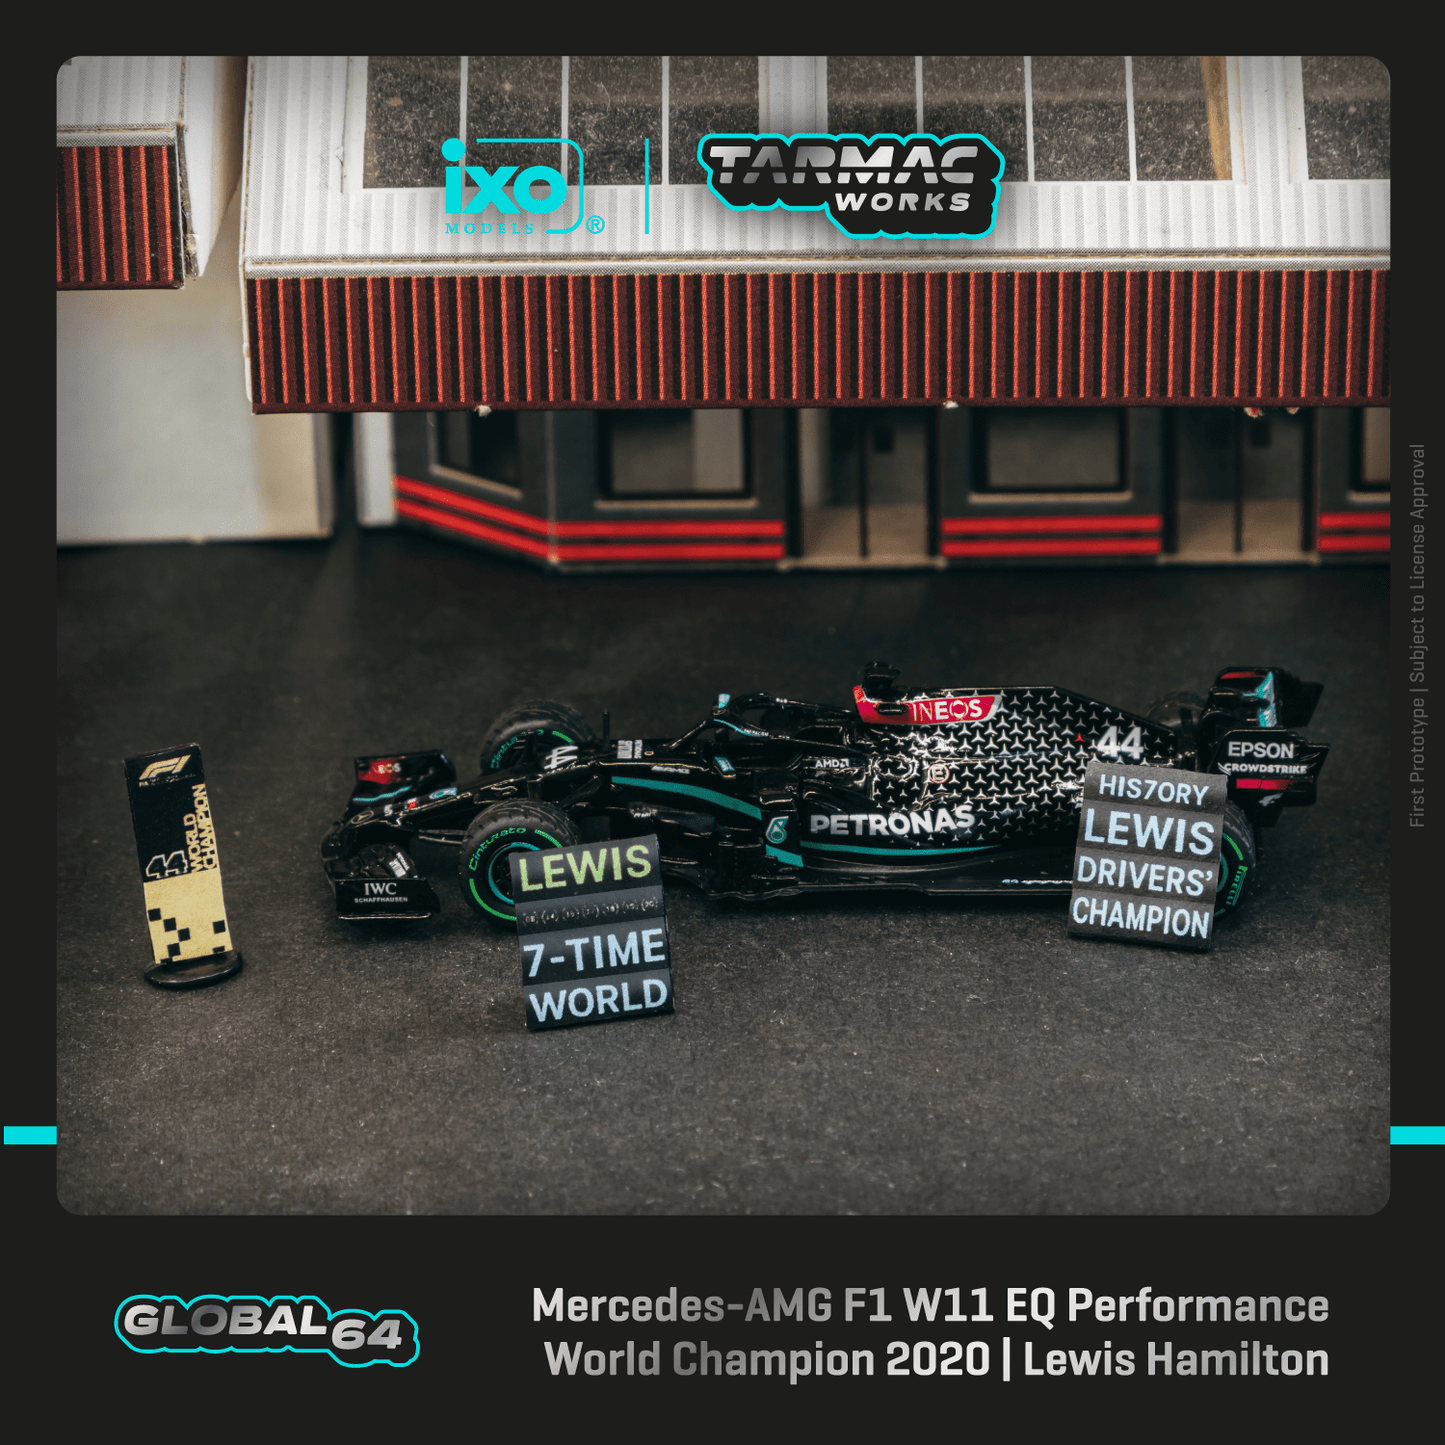 Tarmac Works 1:64 Scale Mercedes-AMG F1 W11 EQ Performance Turkish Grand Prix 2020 Winner World Champion 2020 Lewis Hamilton